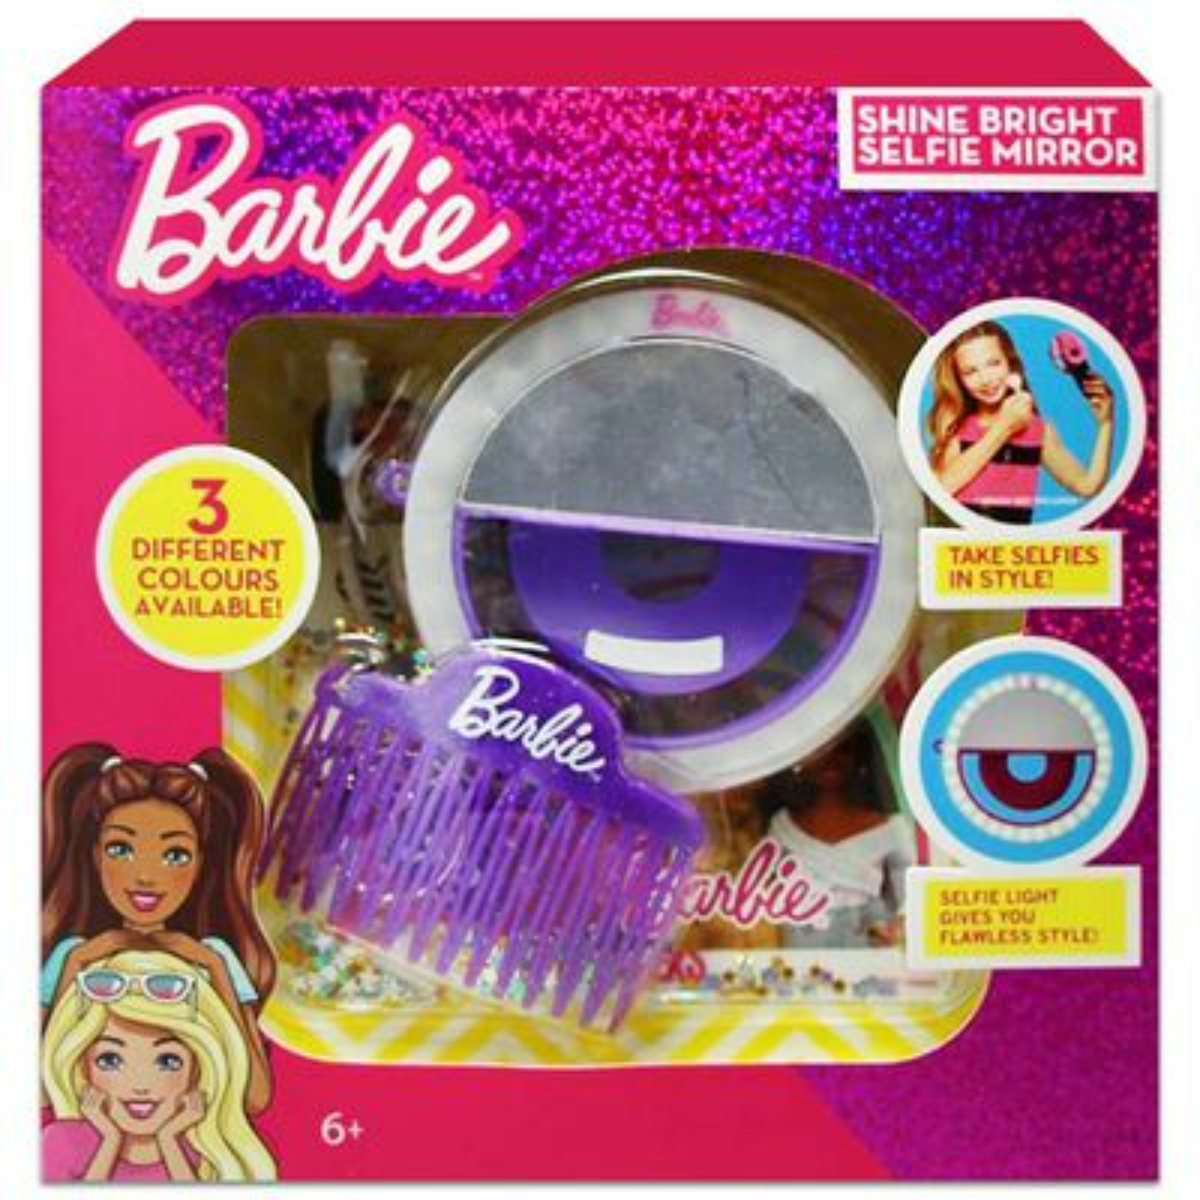 Barbie Shine Bright Selfie Mirror, Assorted, 202104